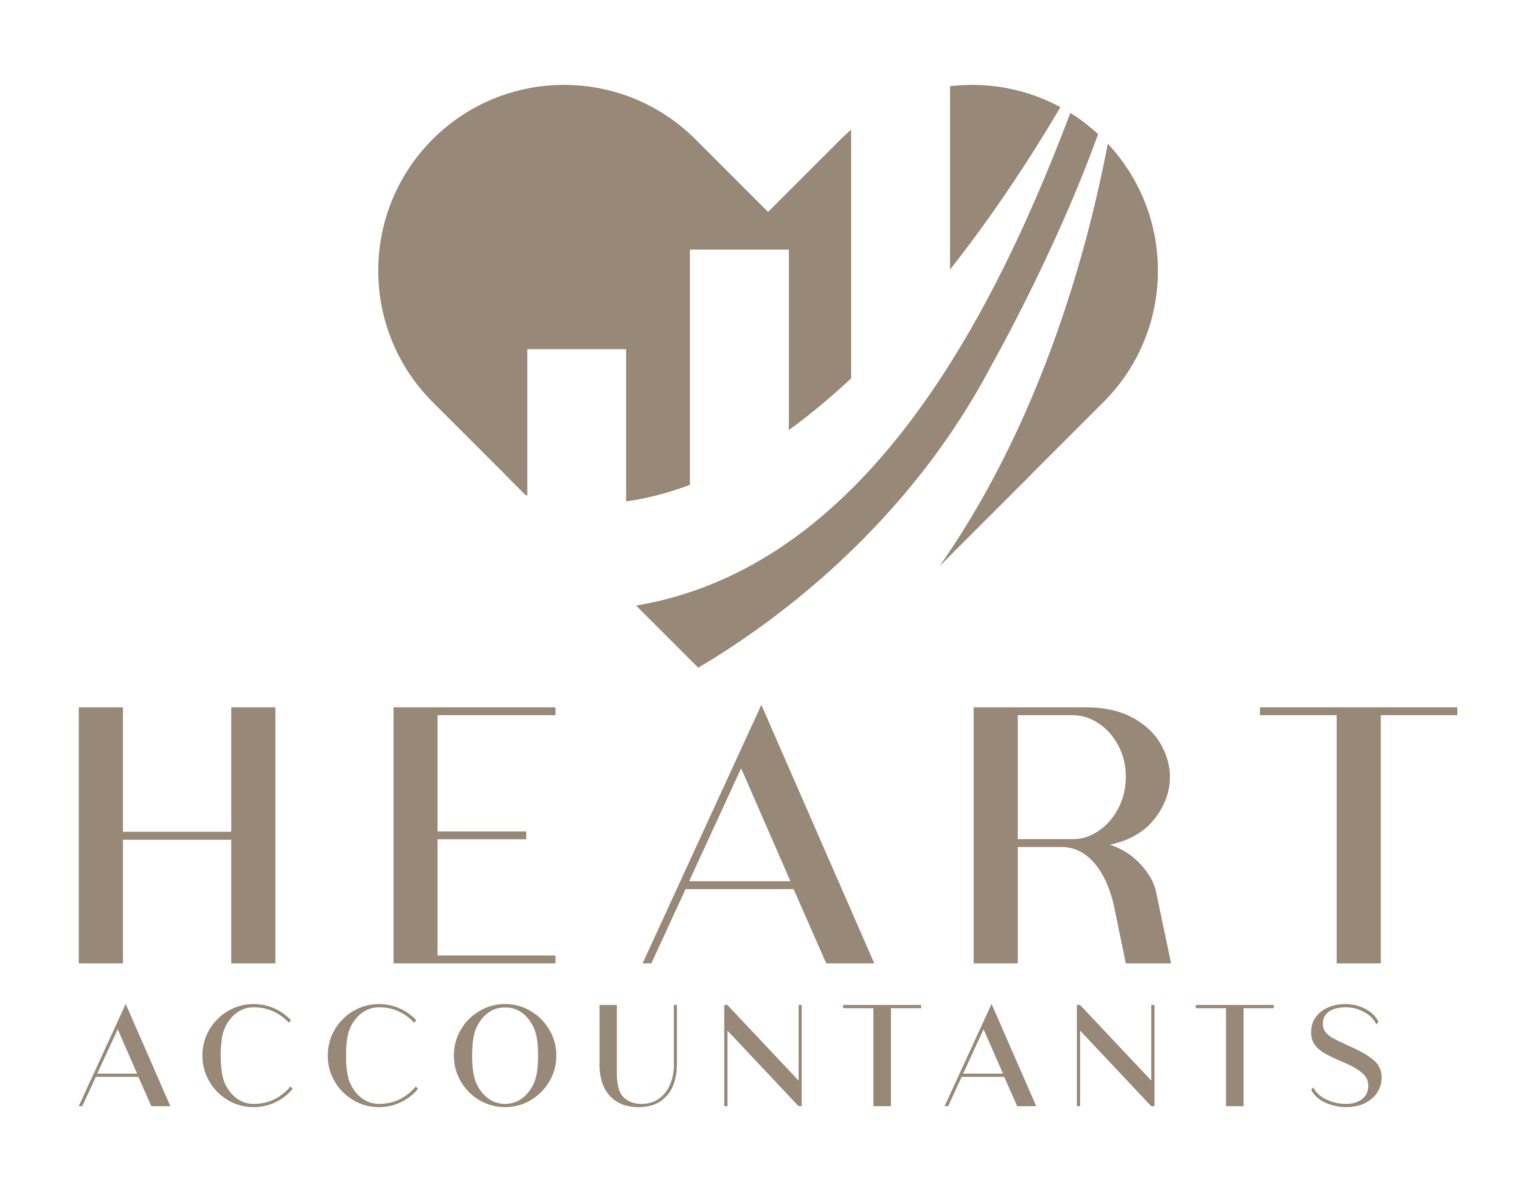 Heart-Accountants-01-1536x1192